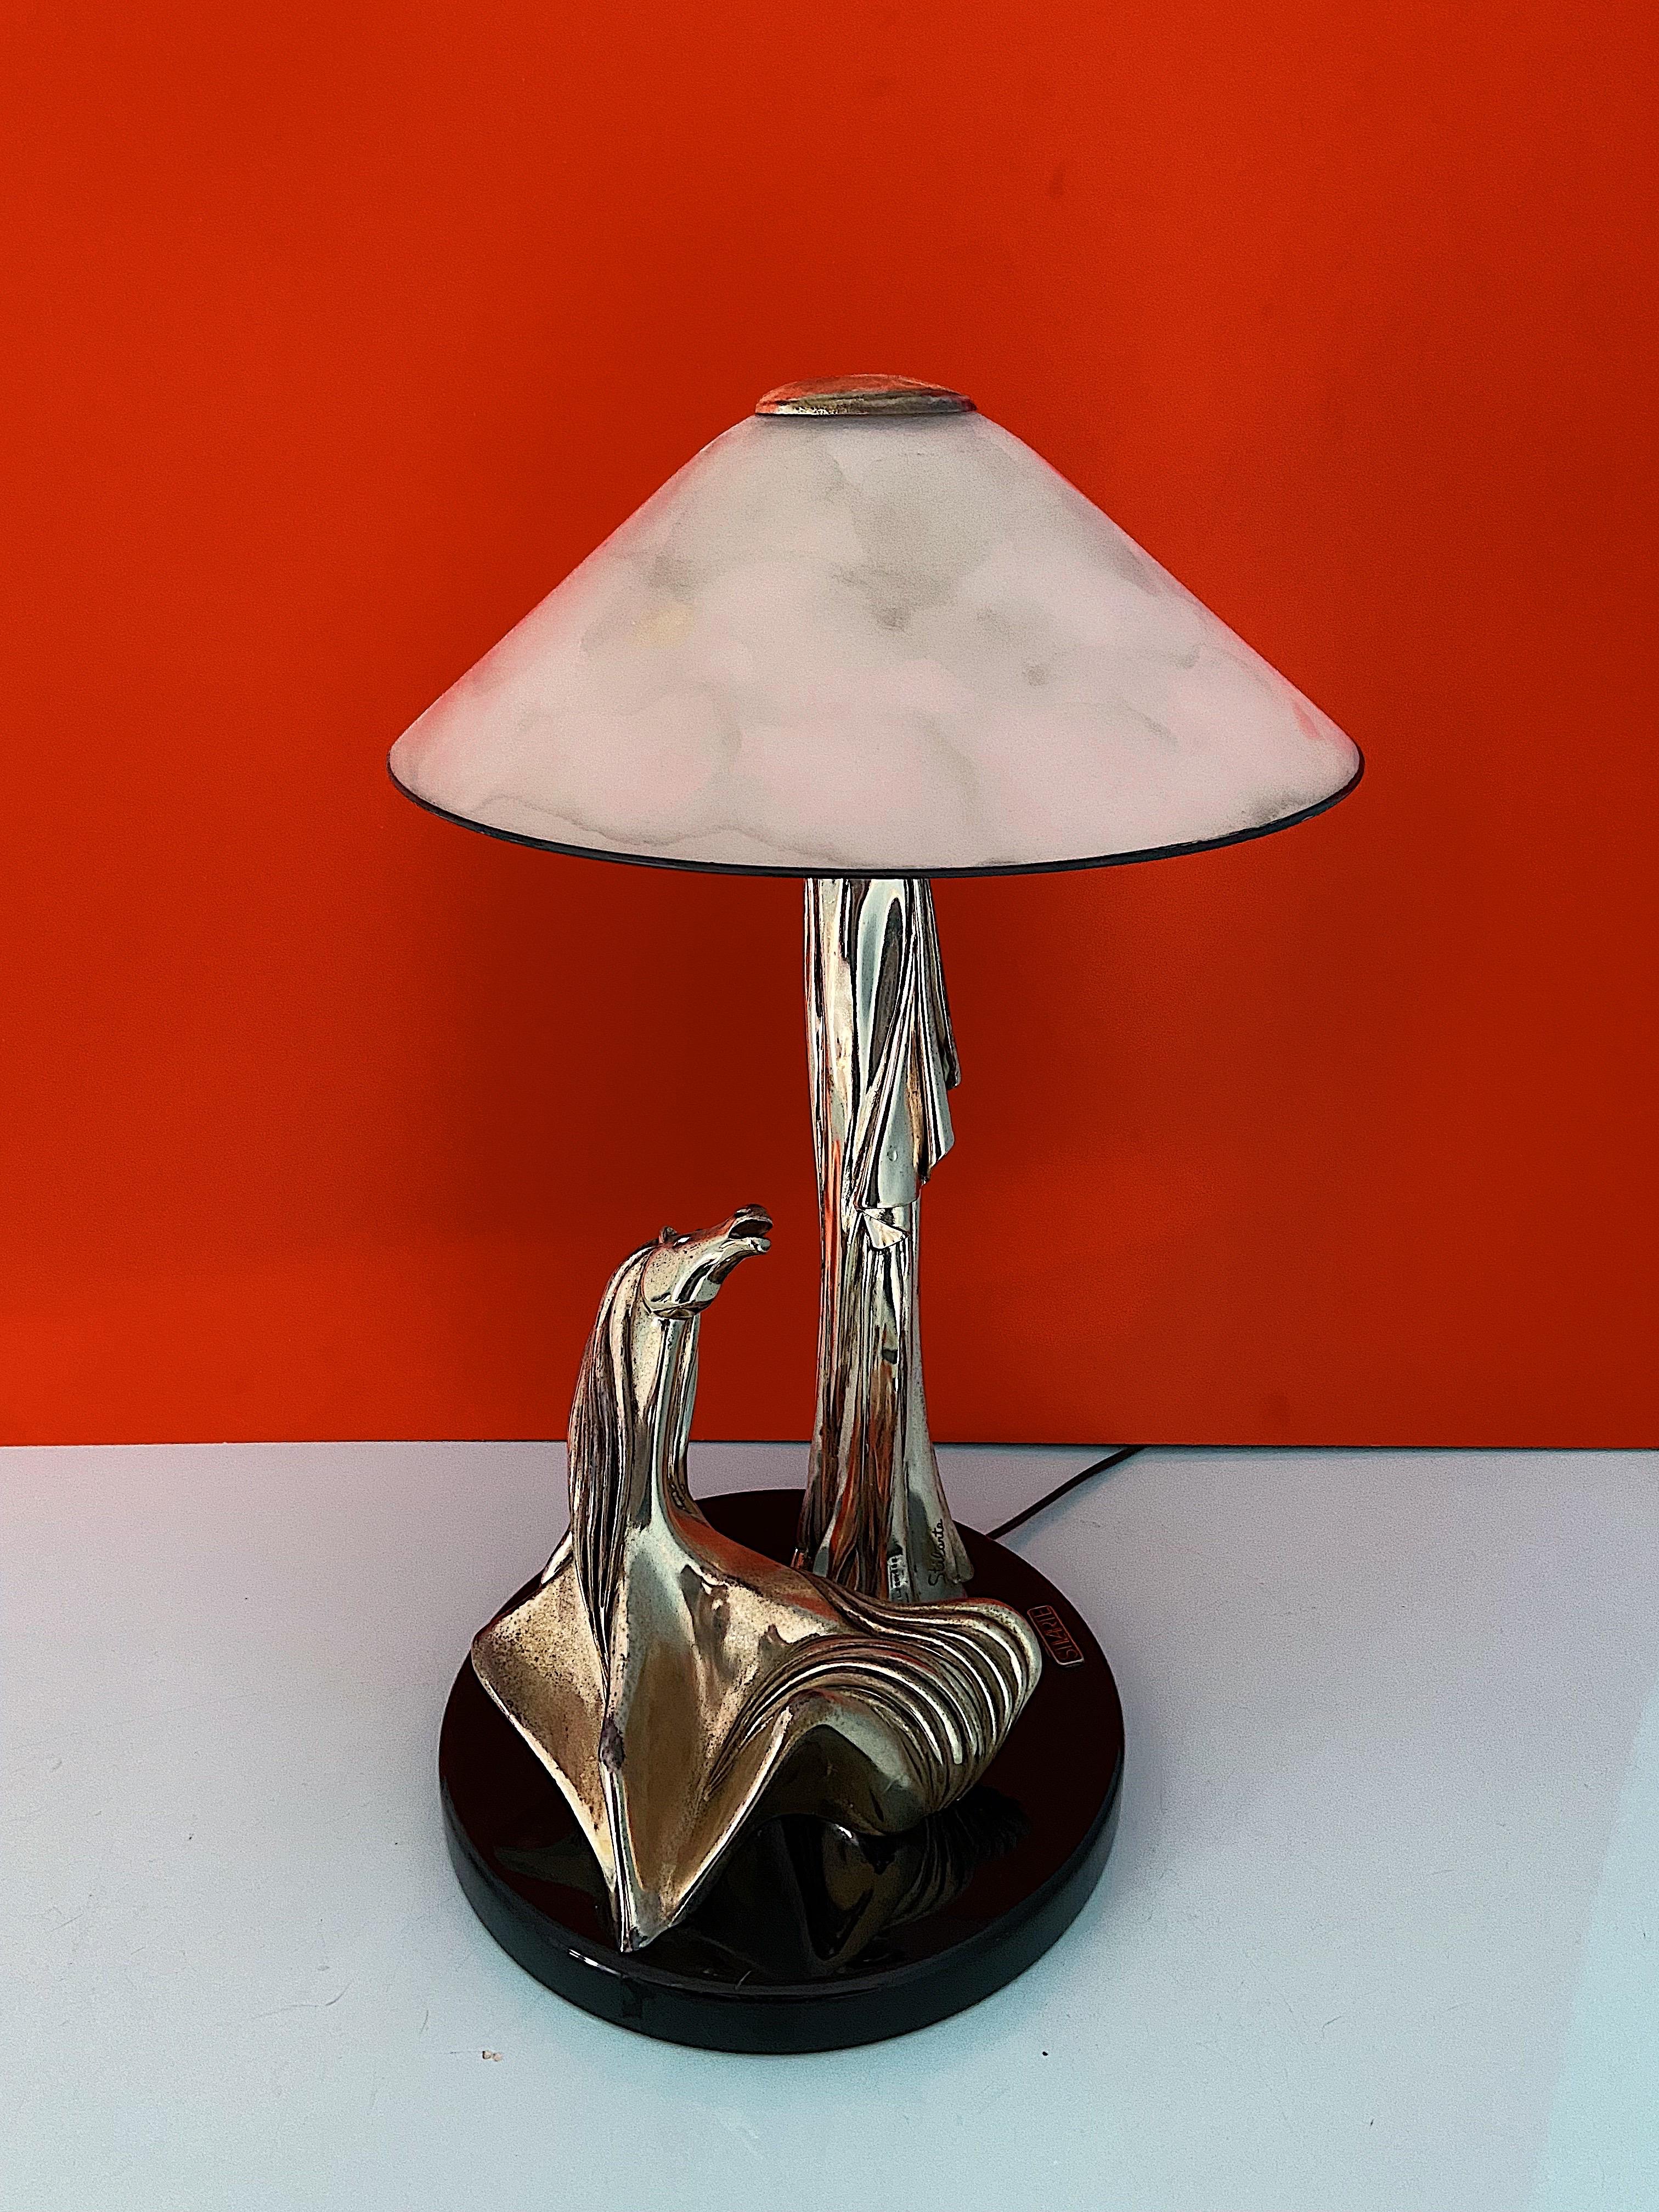 Lampe de table de la marque italienne STILARTE modèle 